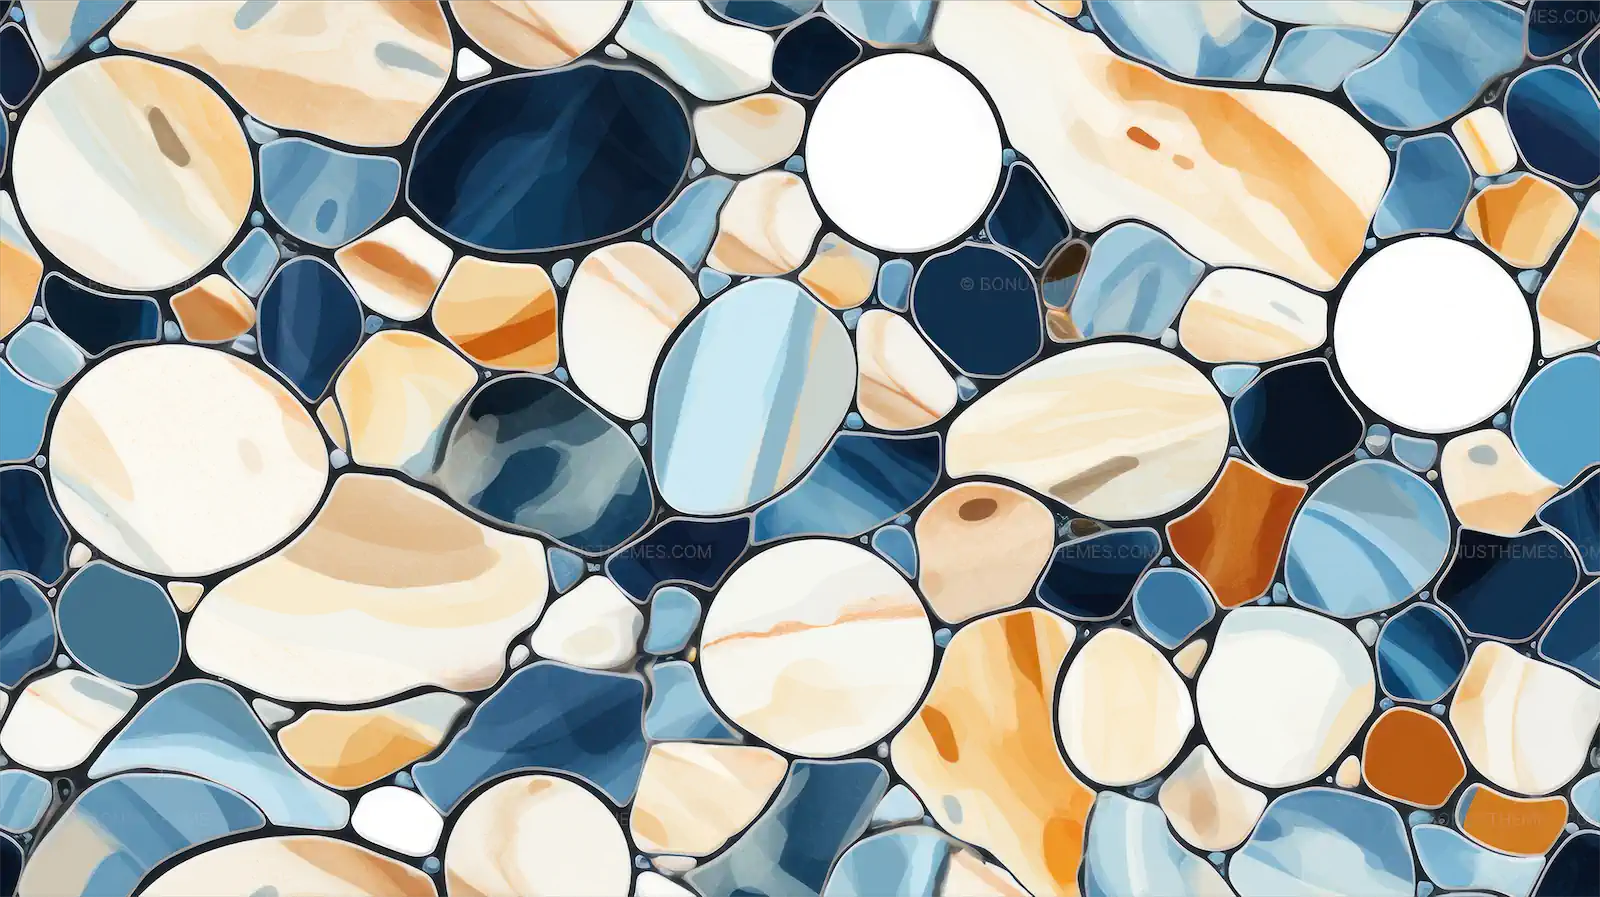 Aegean stones and mosaics seamless pattern